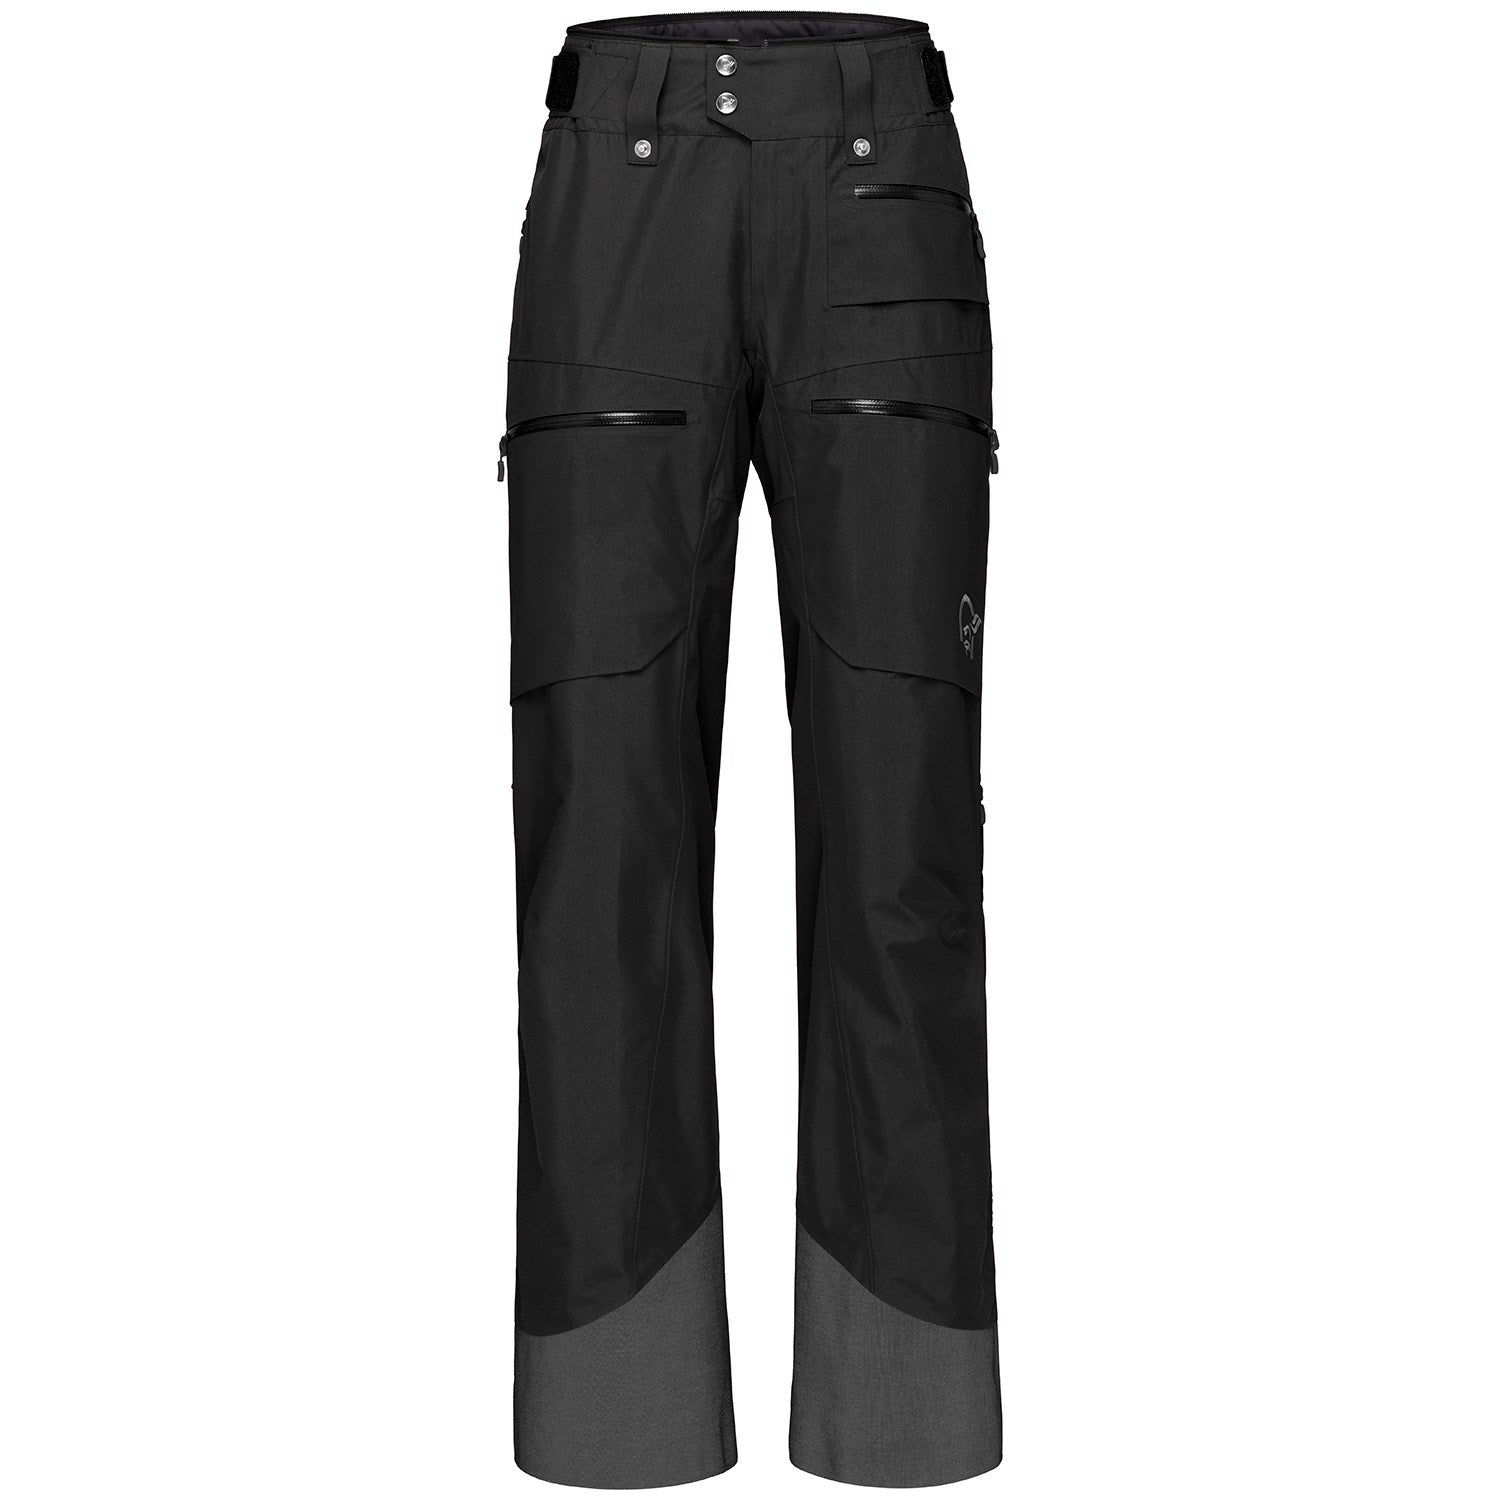 Women's Lofoten Gore-tex Insulated Pants (Past Season)